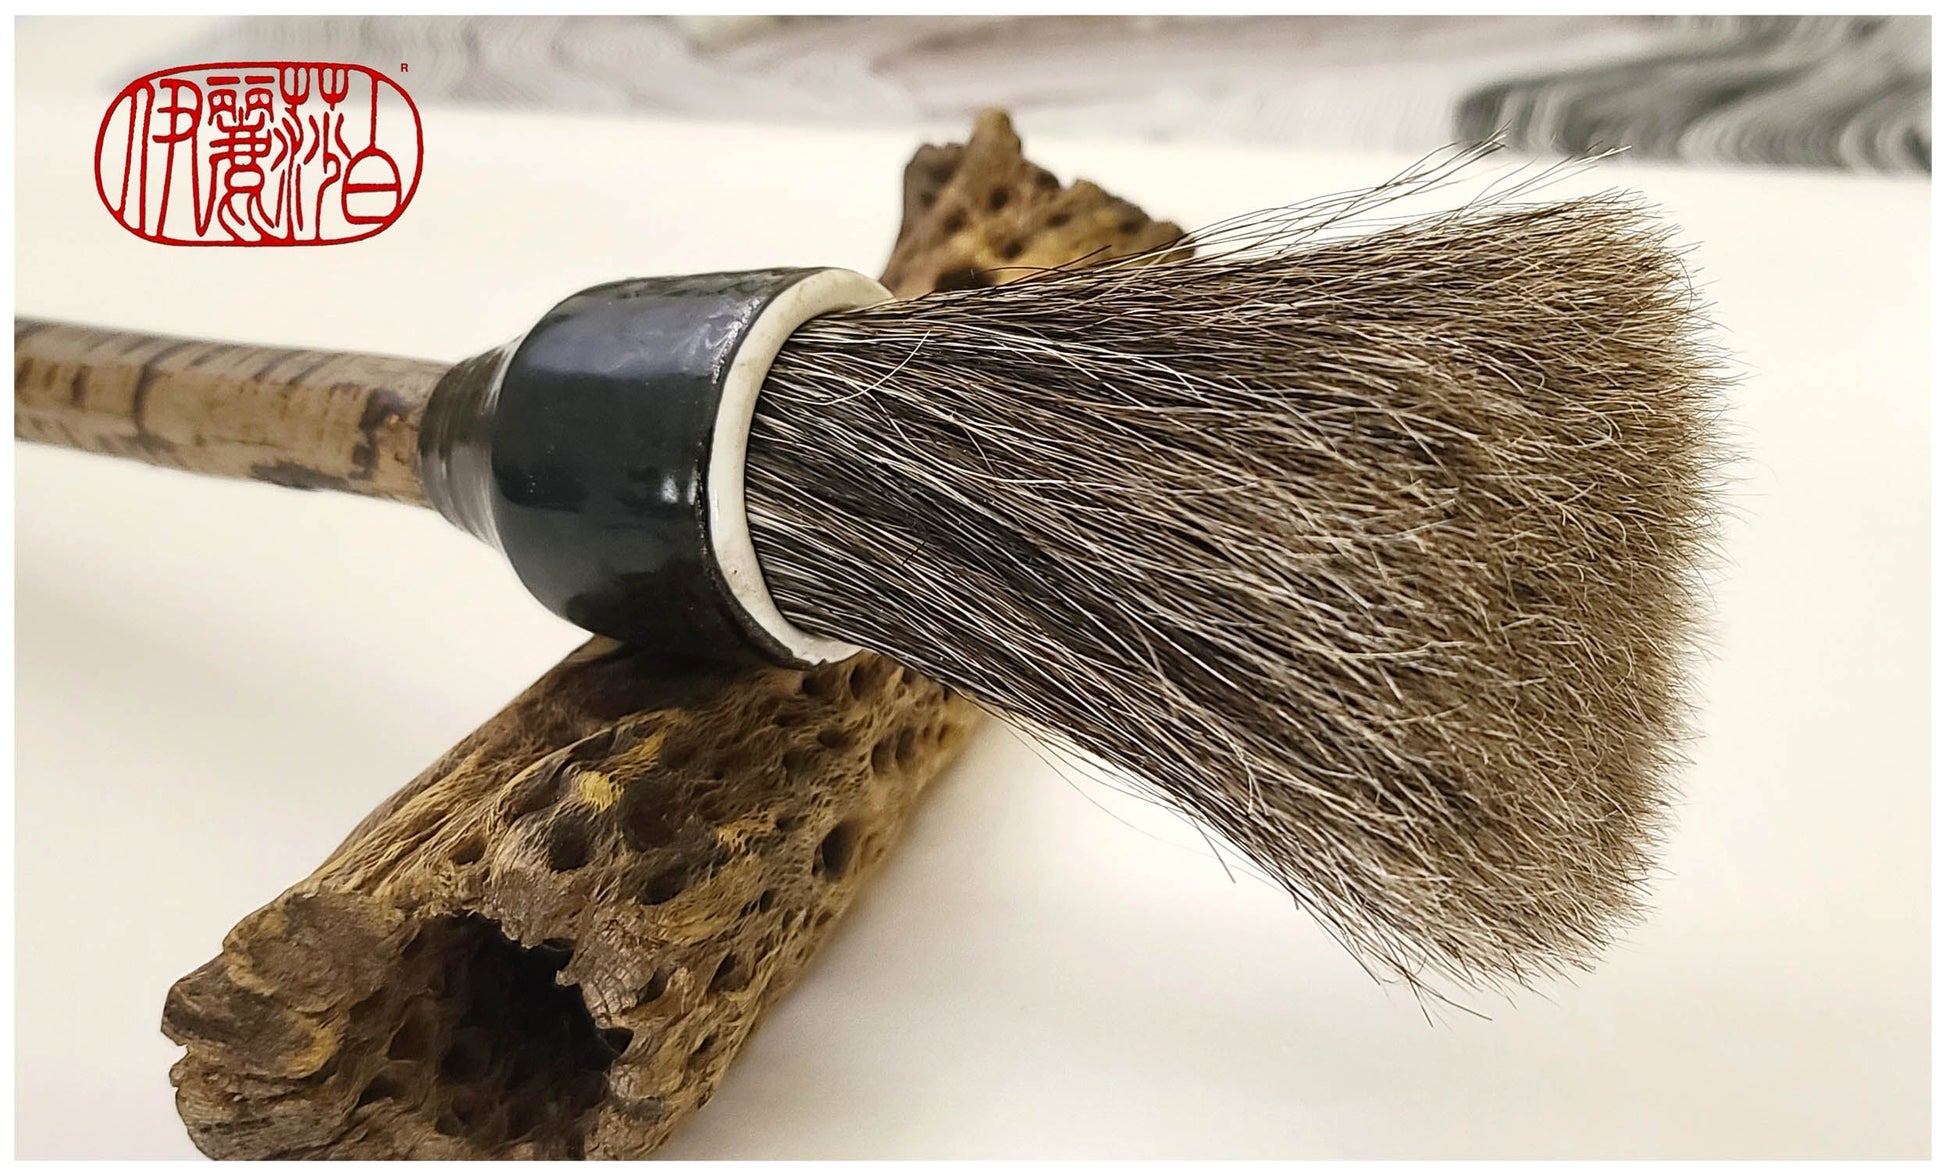 Mixed Horsehair Sumi-e Paint Brush with Ceramic Ferrule #130 Art Supplies Elizabeth Schowachert Art